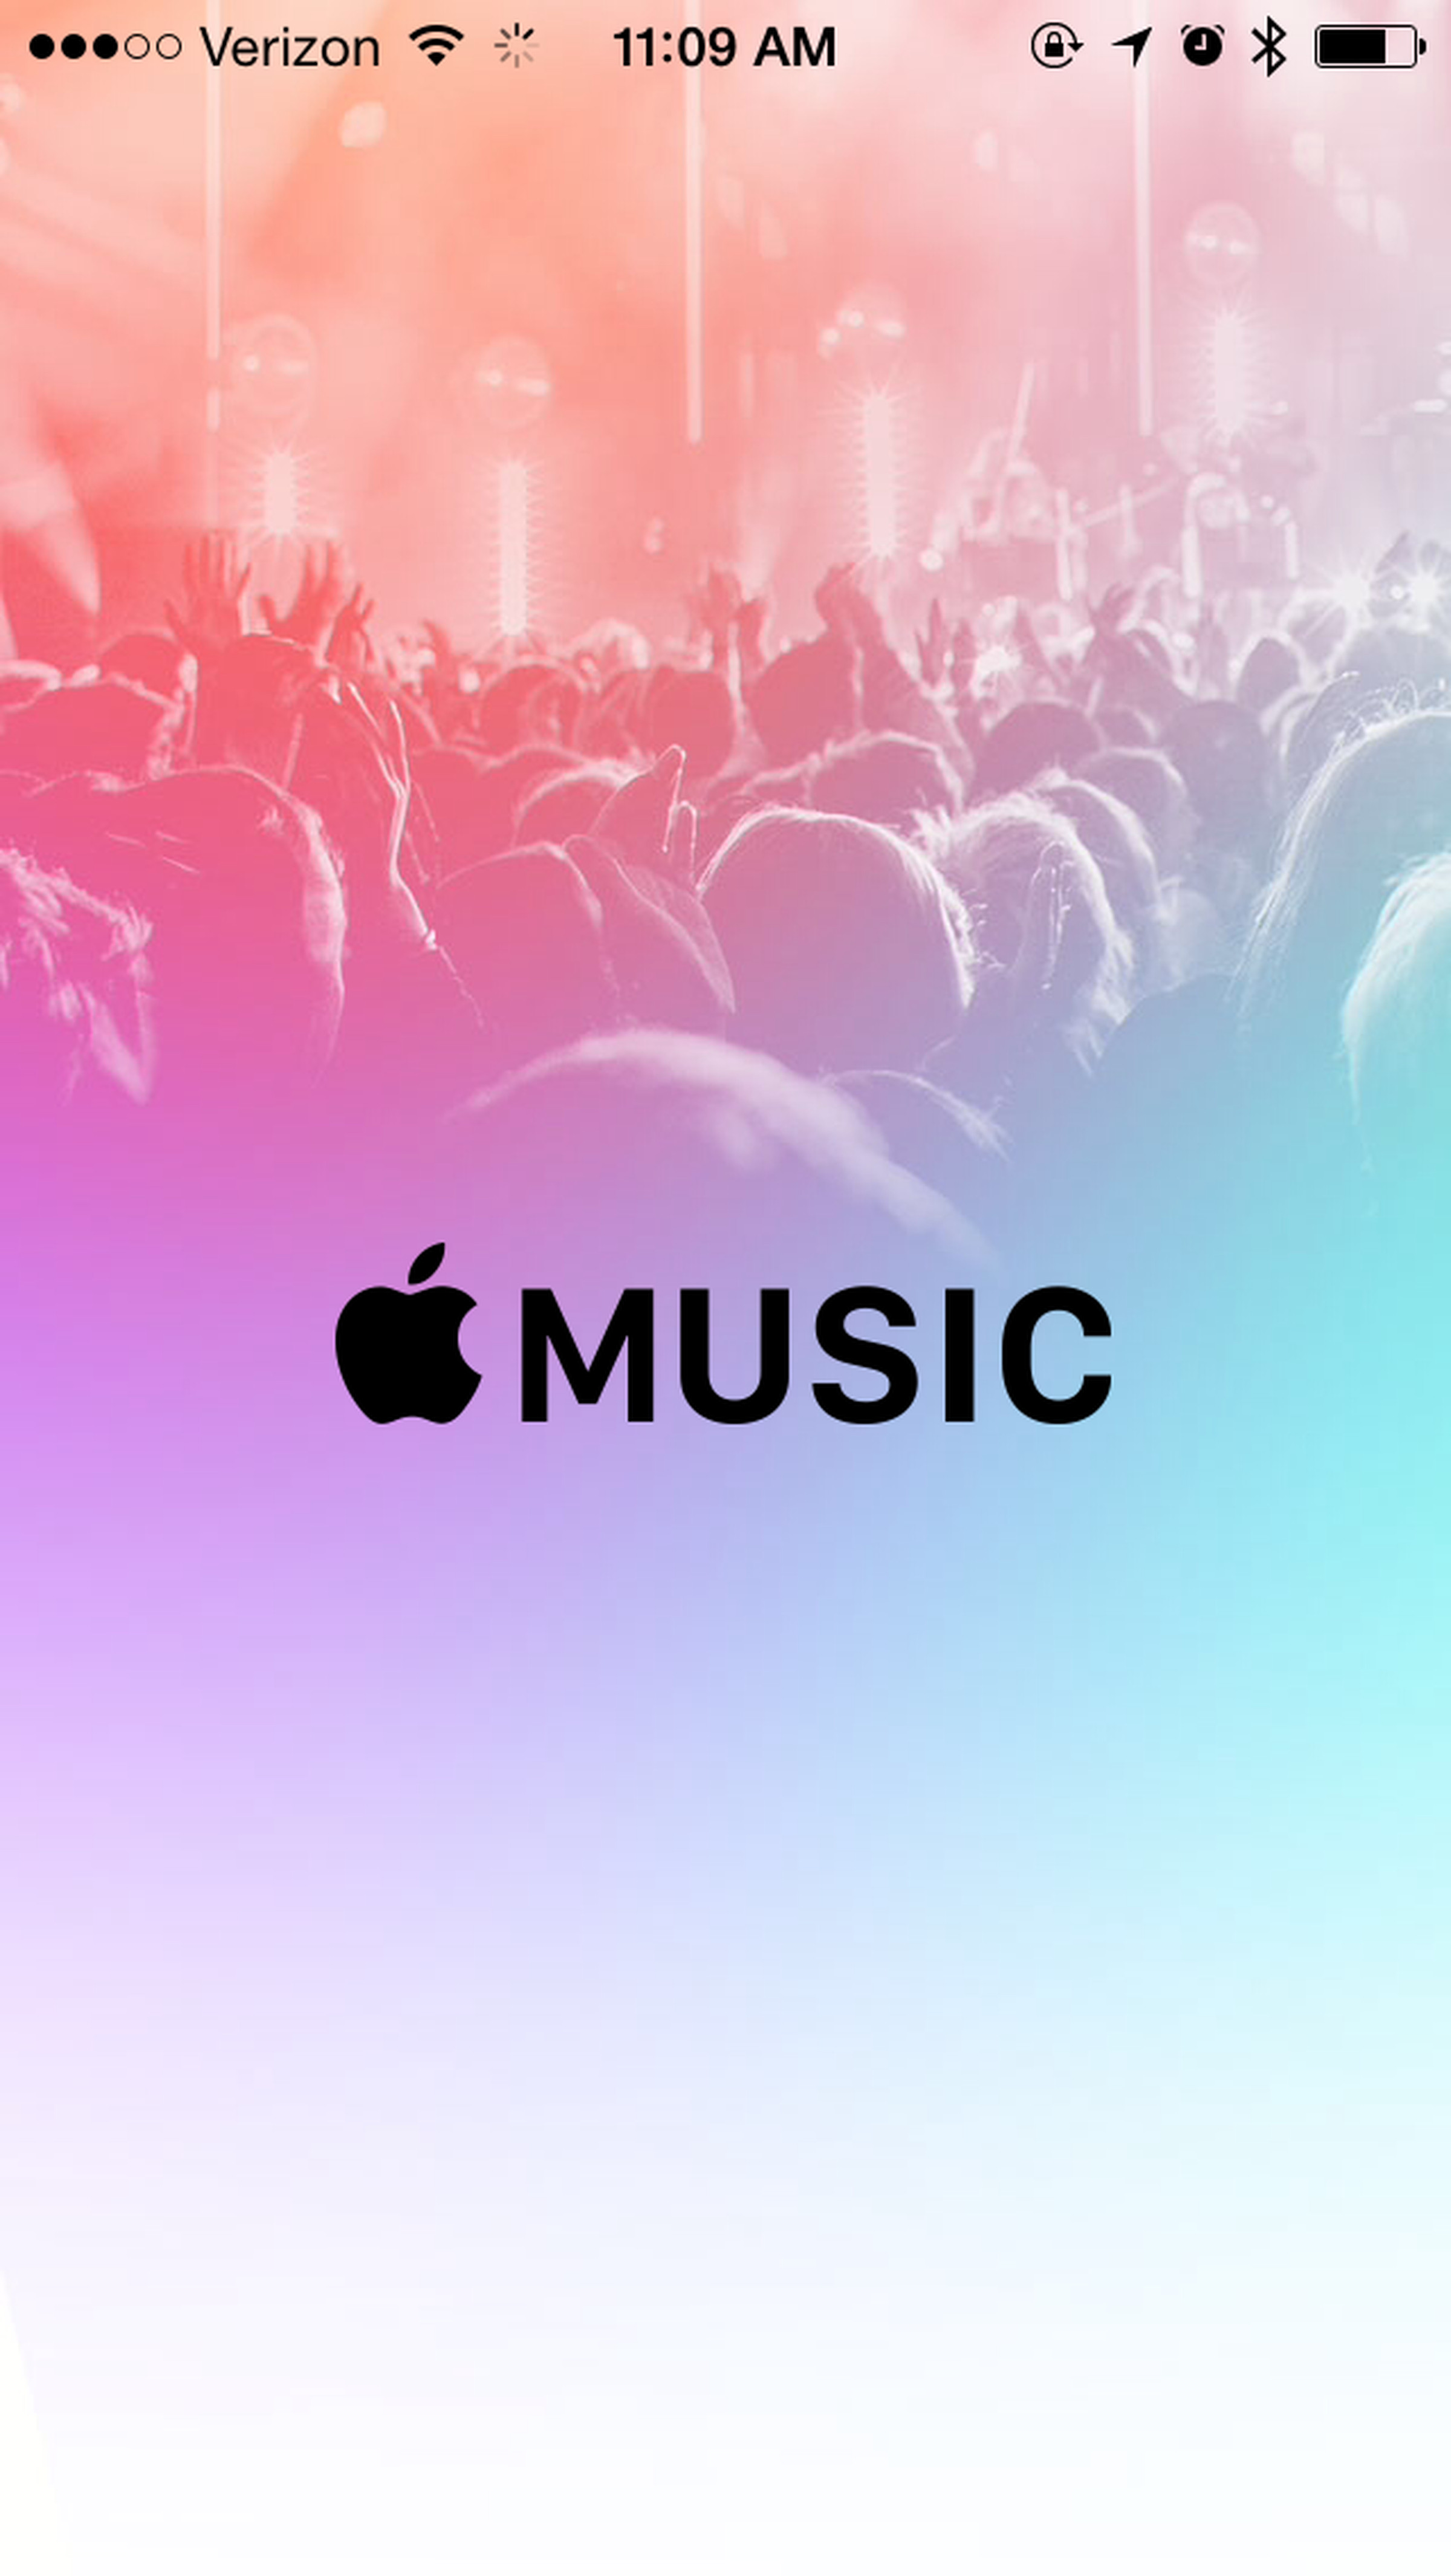 Apple Music hands-on photos